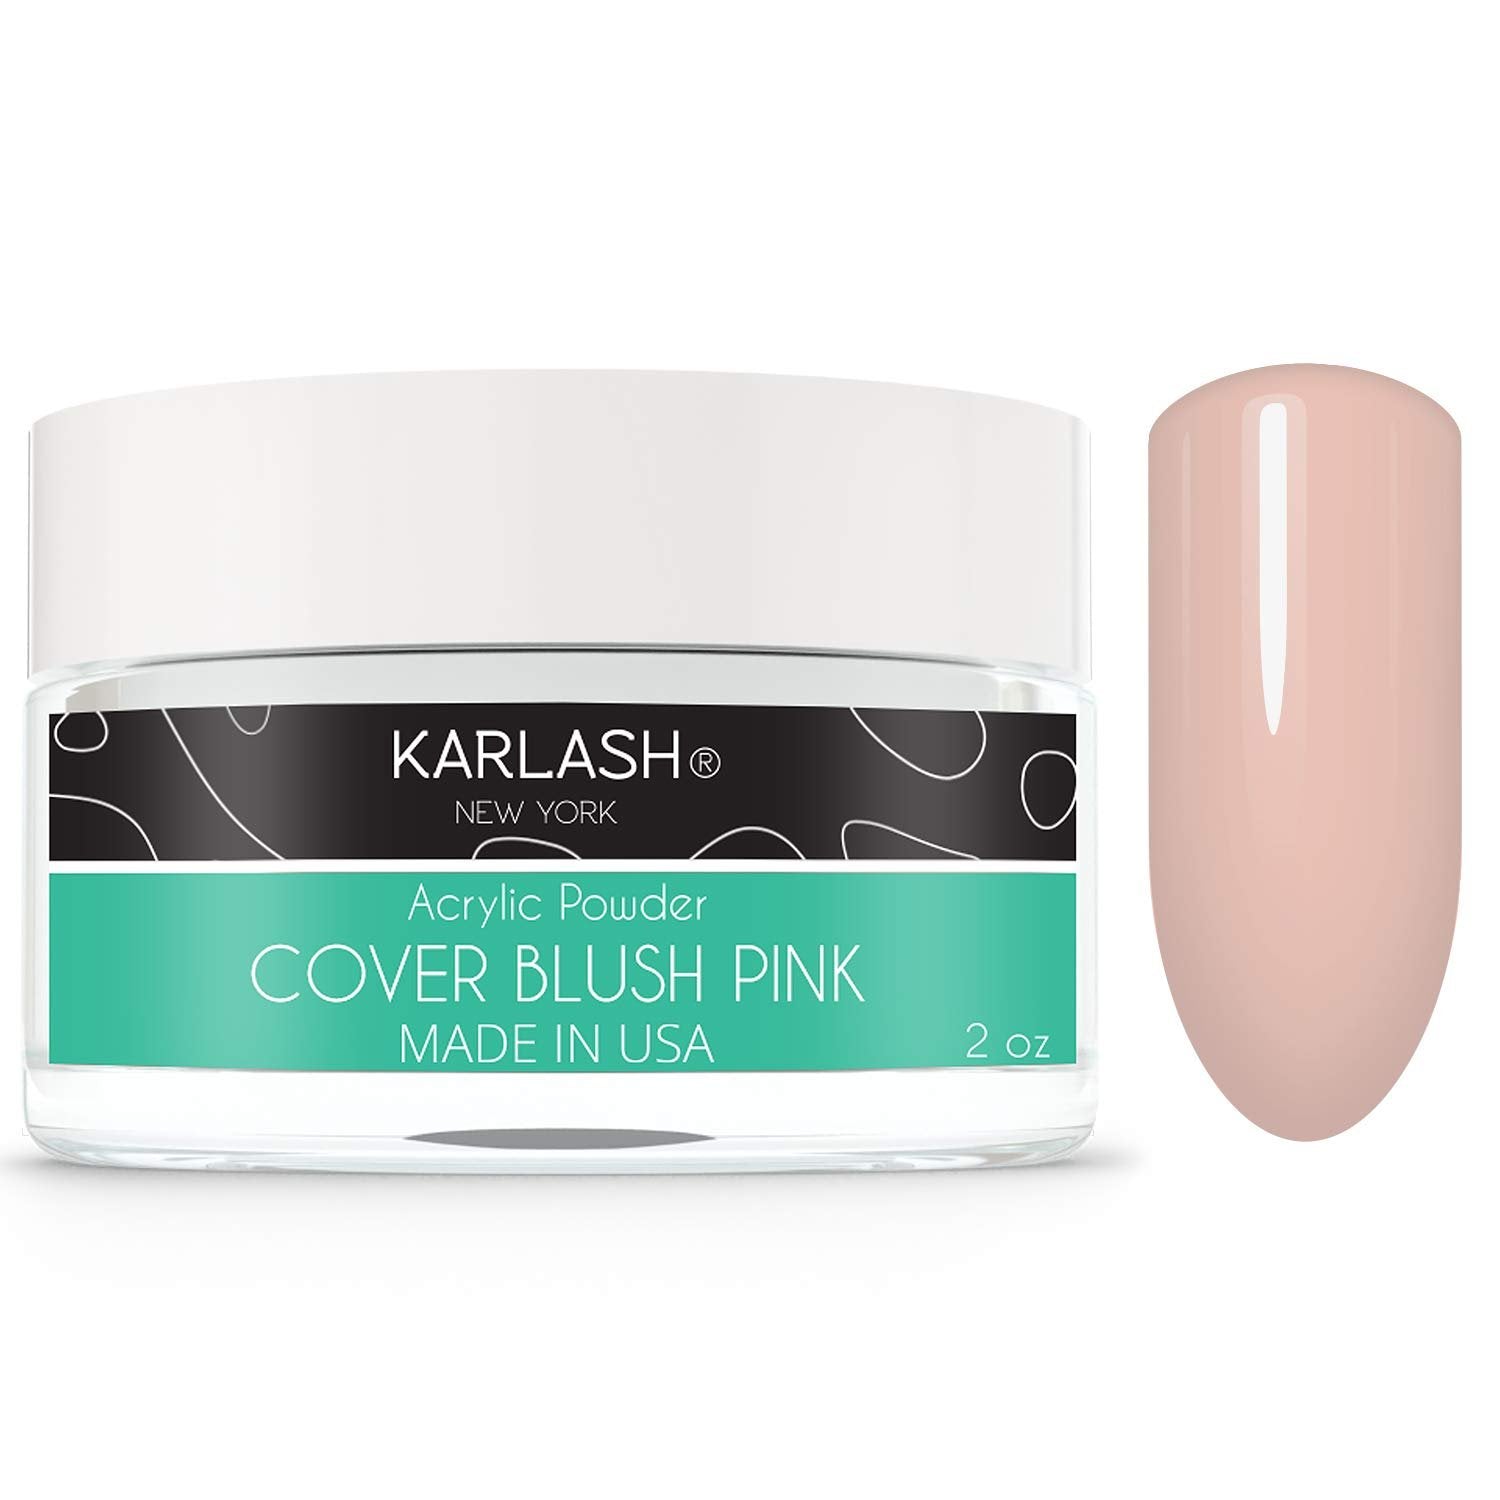 Karlash Professional Acrylic Powder Cover Blush Pink 2 oz